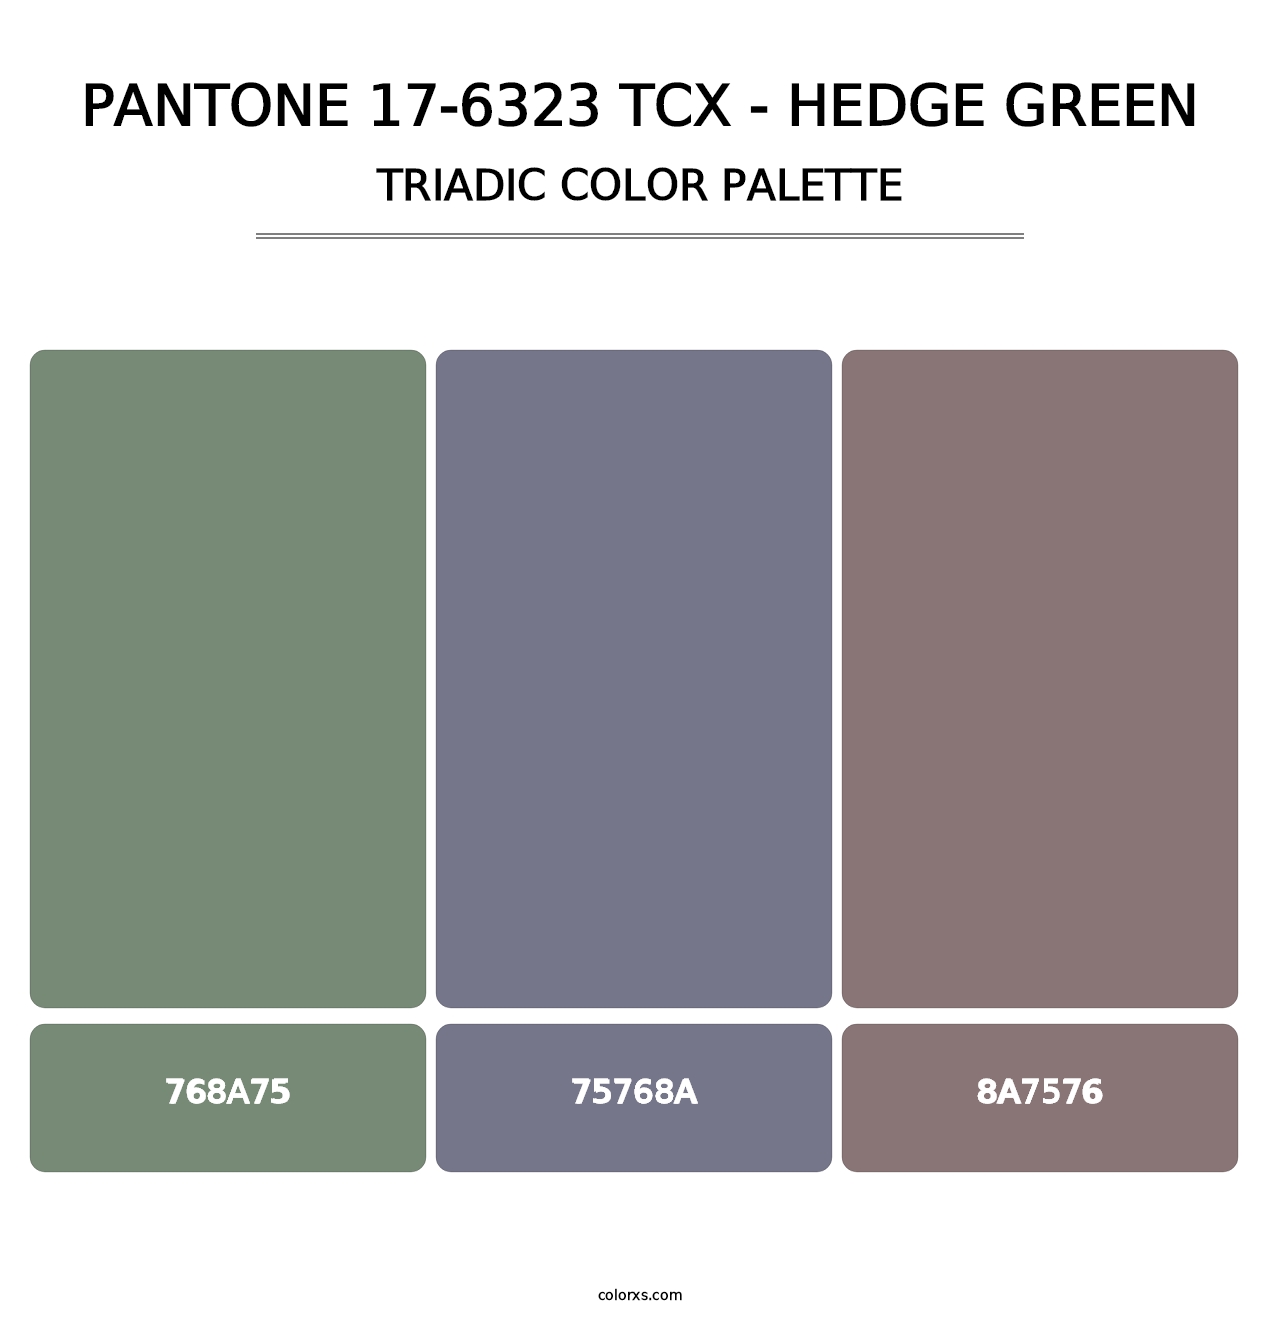 PANTONE 17-6323 TCX - Hedge Green - Triadic Color Palette